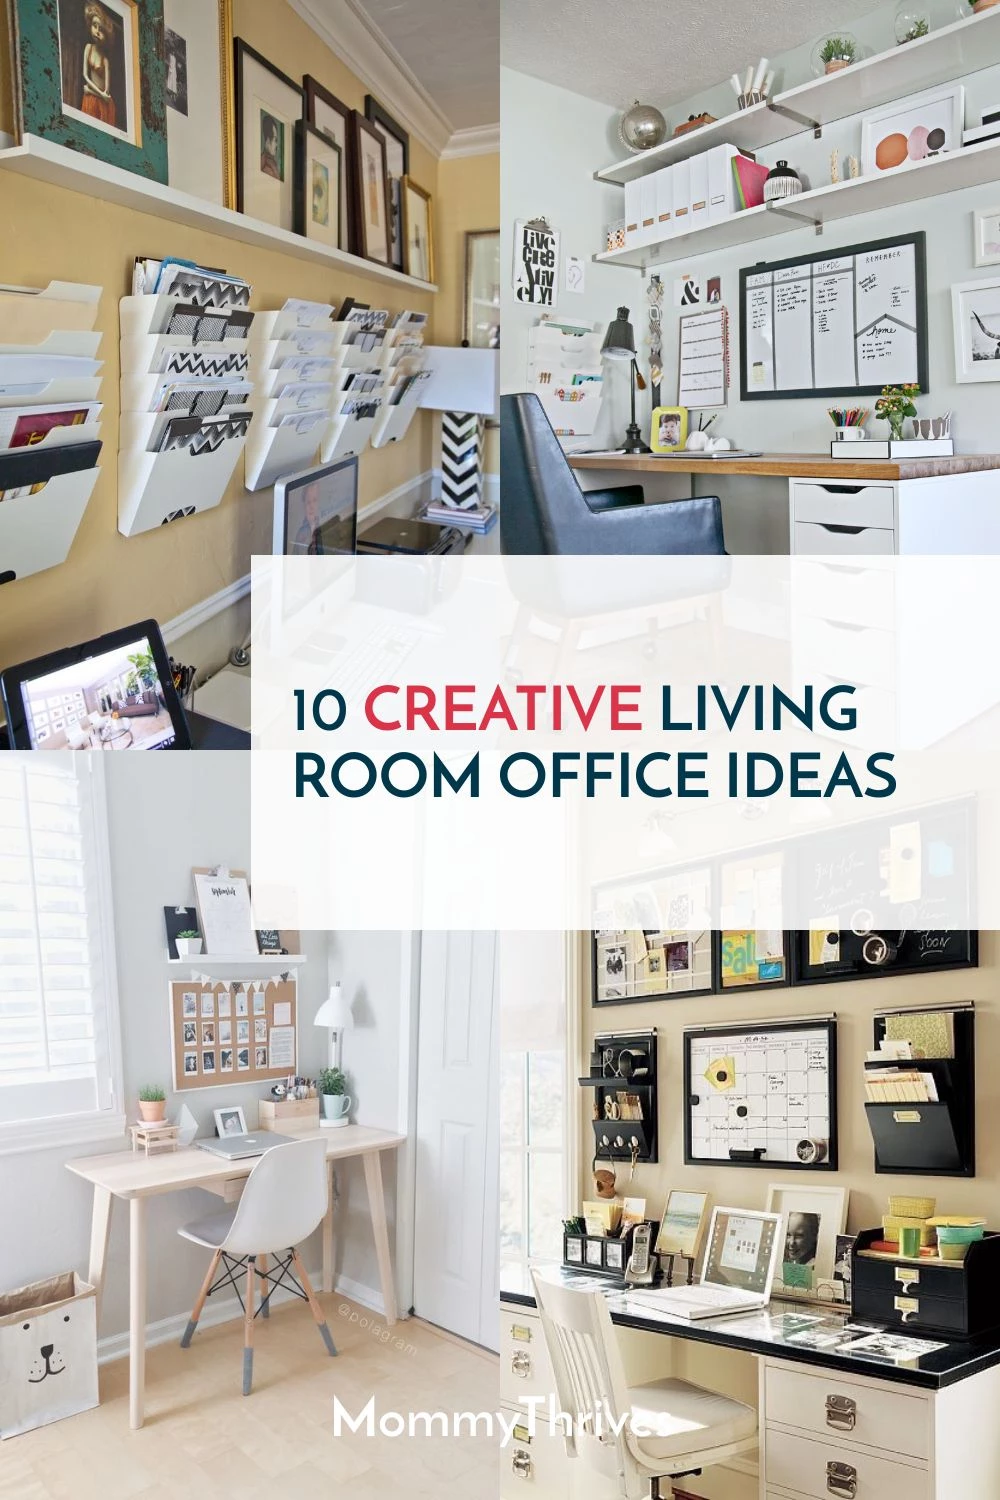 10 Desk Decor Ideas: How to Decorate Your Office Desk